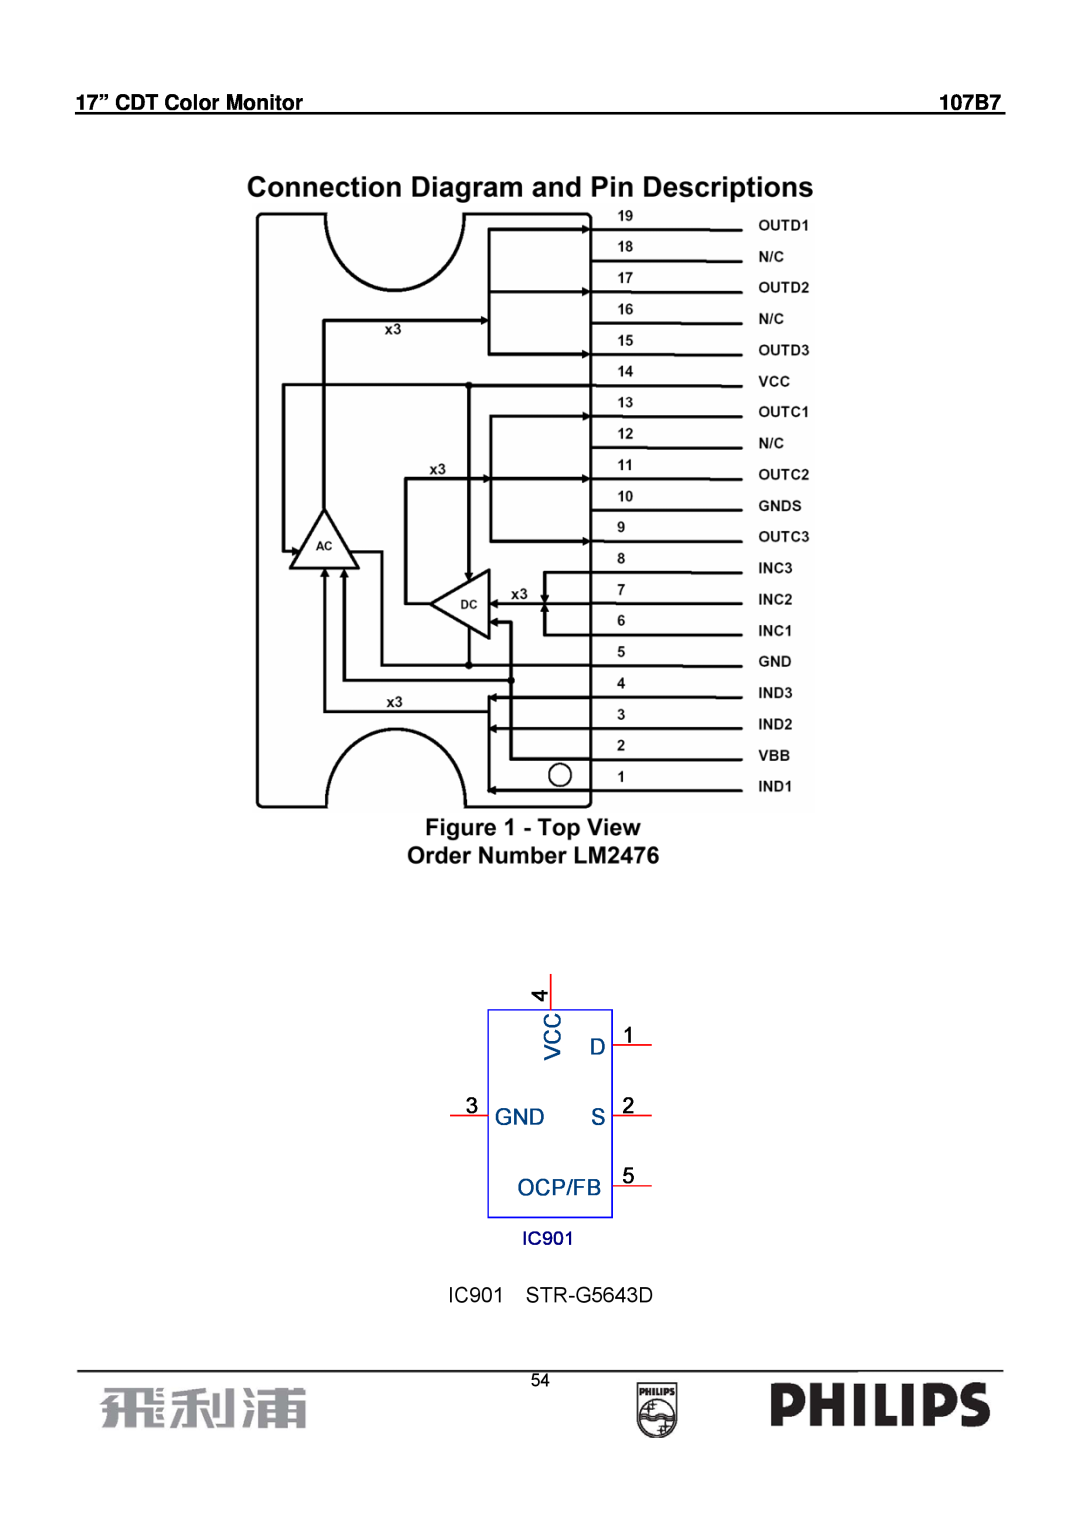 Philips 107B7 manual Ocp/Fb, IC901 STR-G5643D, 17” CDT Color Monitor 